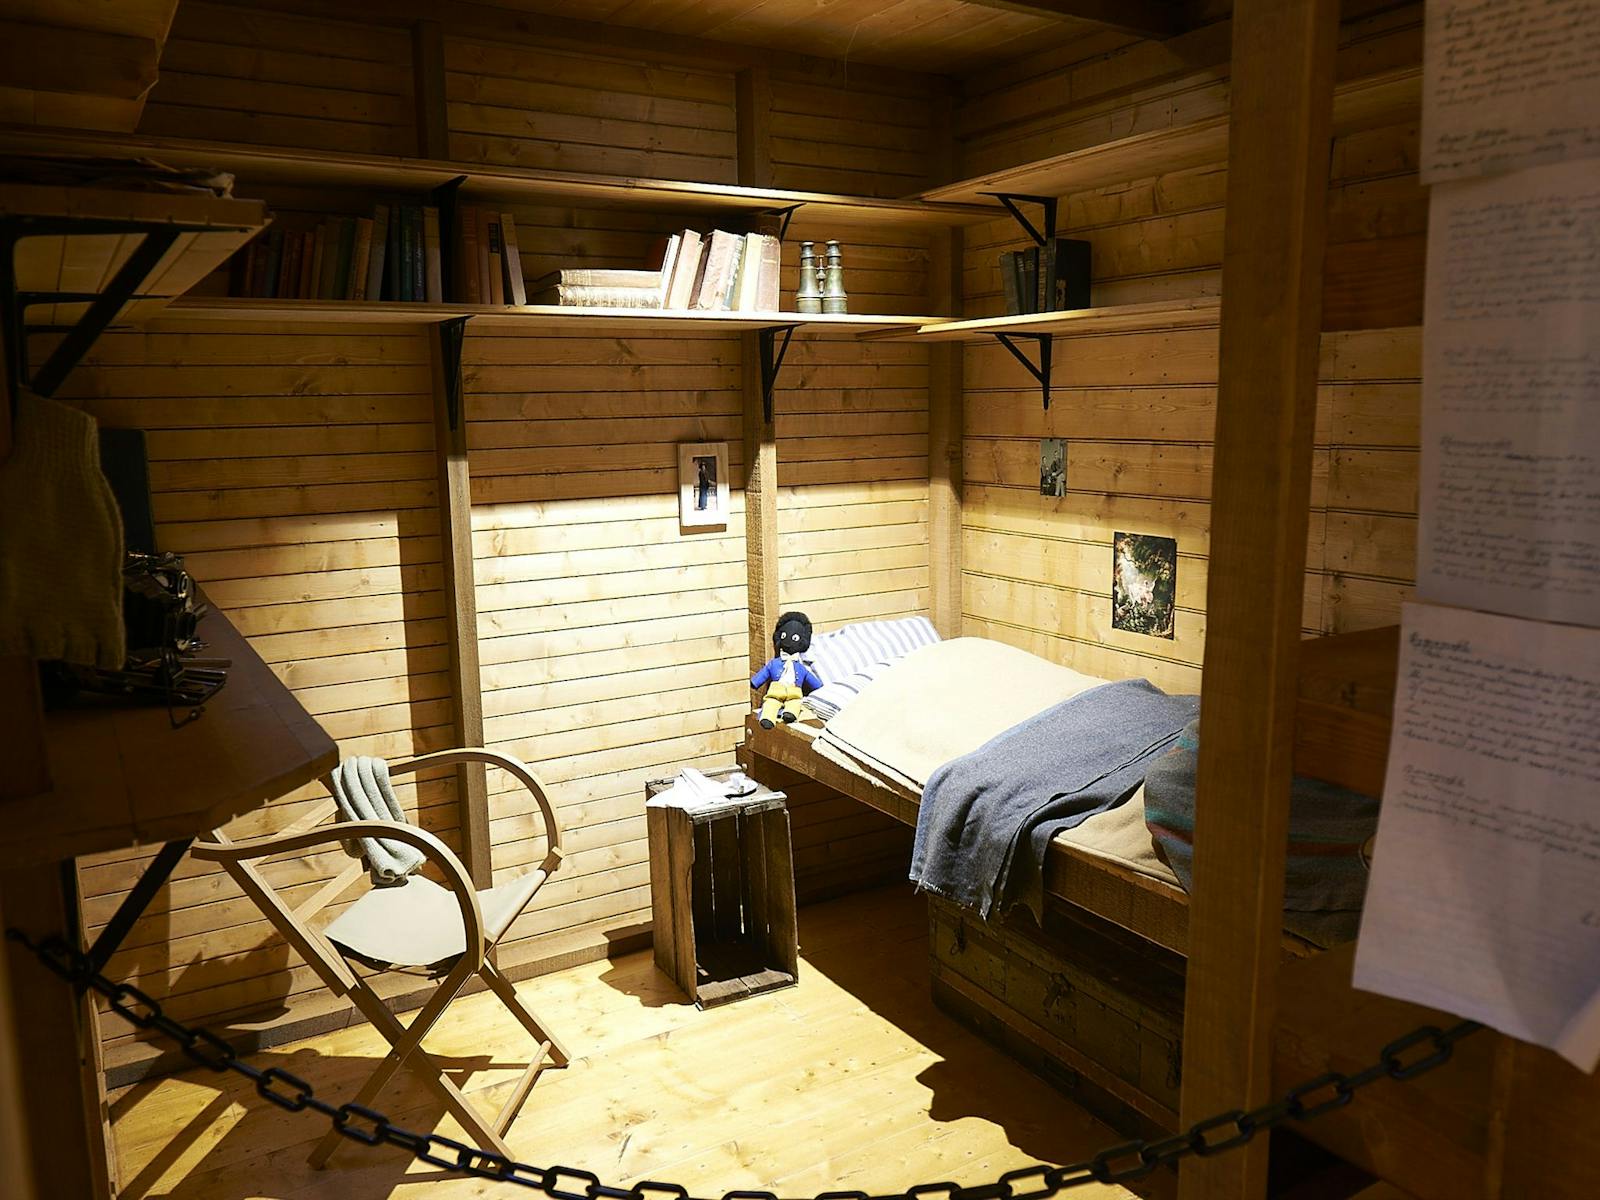 Mawson's Room